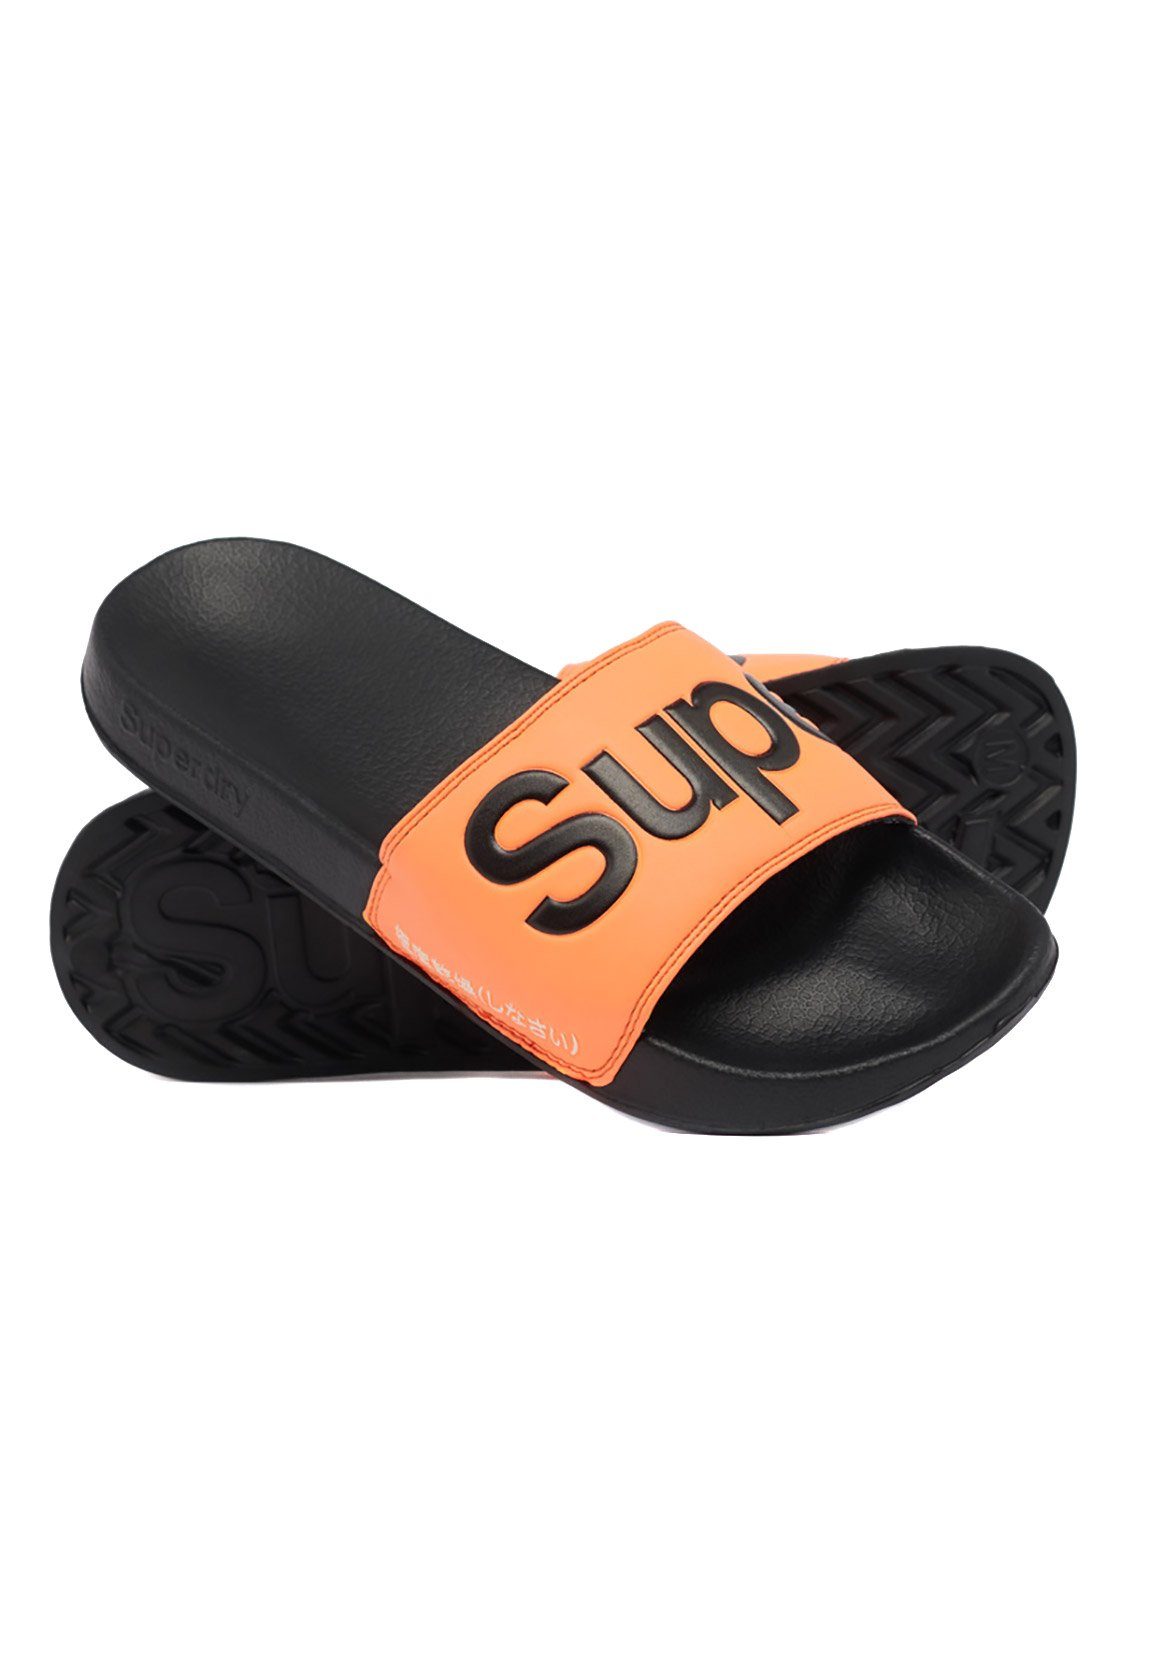 Superdry »Superdry Herren Bade-Sandalen CLASSIC POOL SLIDE Black Hazard  Orange Optic Schwarz Orange« Badesandale online kaufen | OTTO